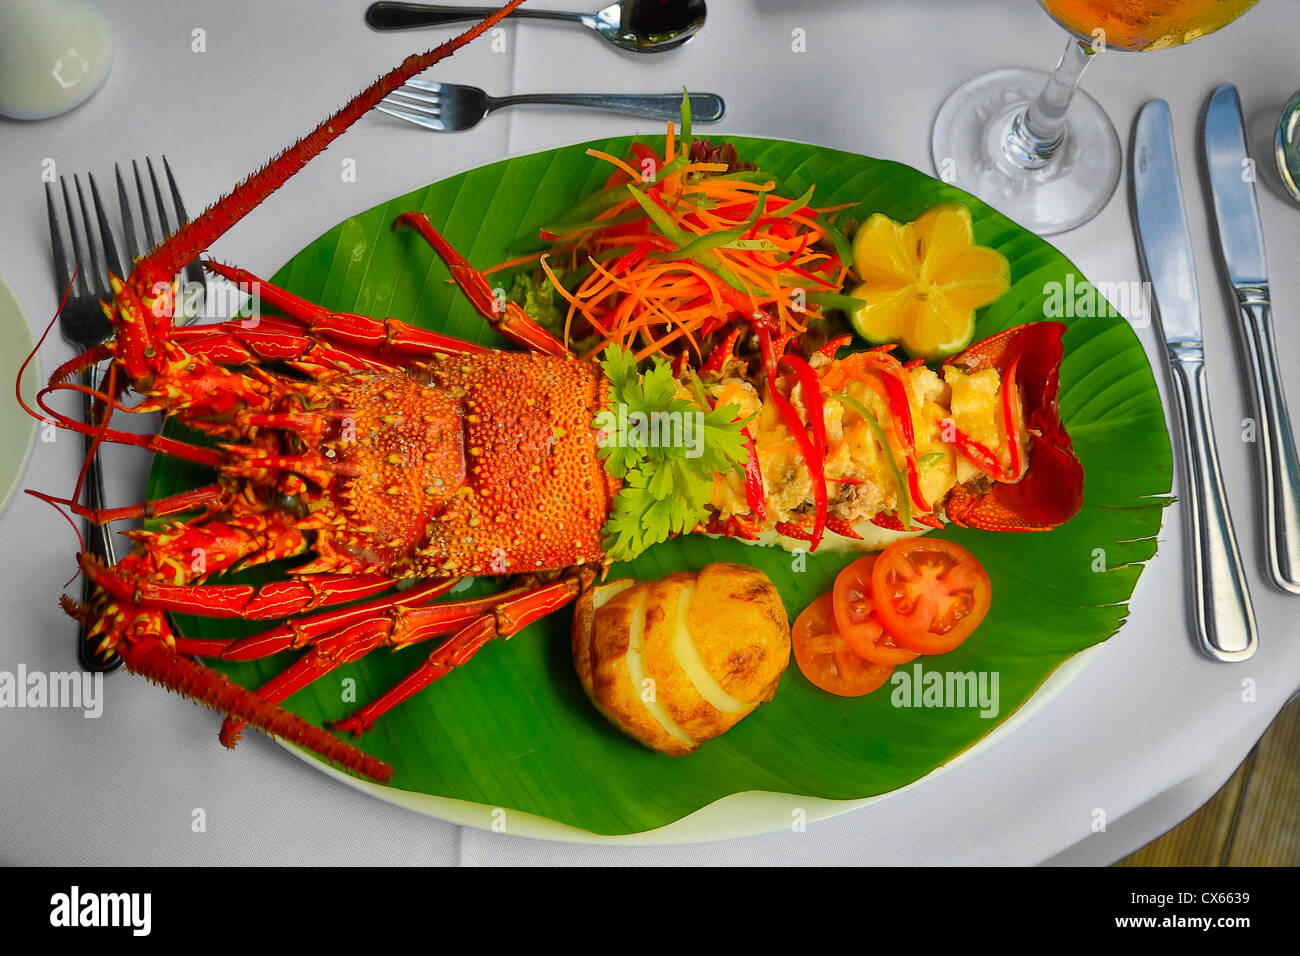 Lobster, Fiji Stock Photo